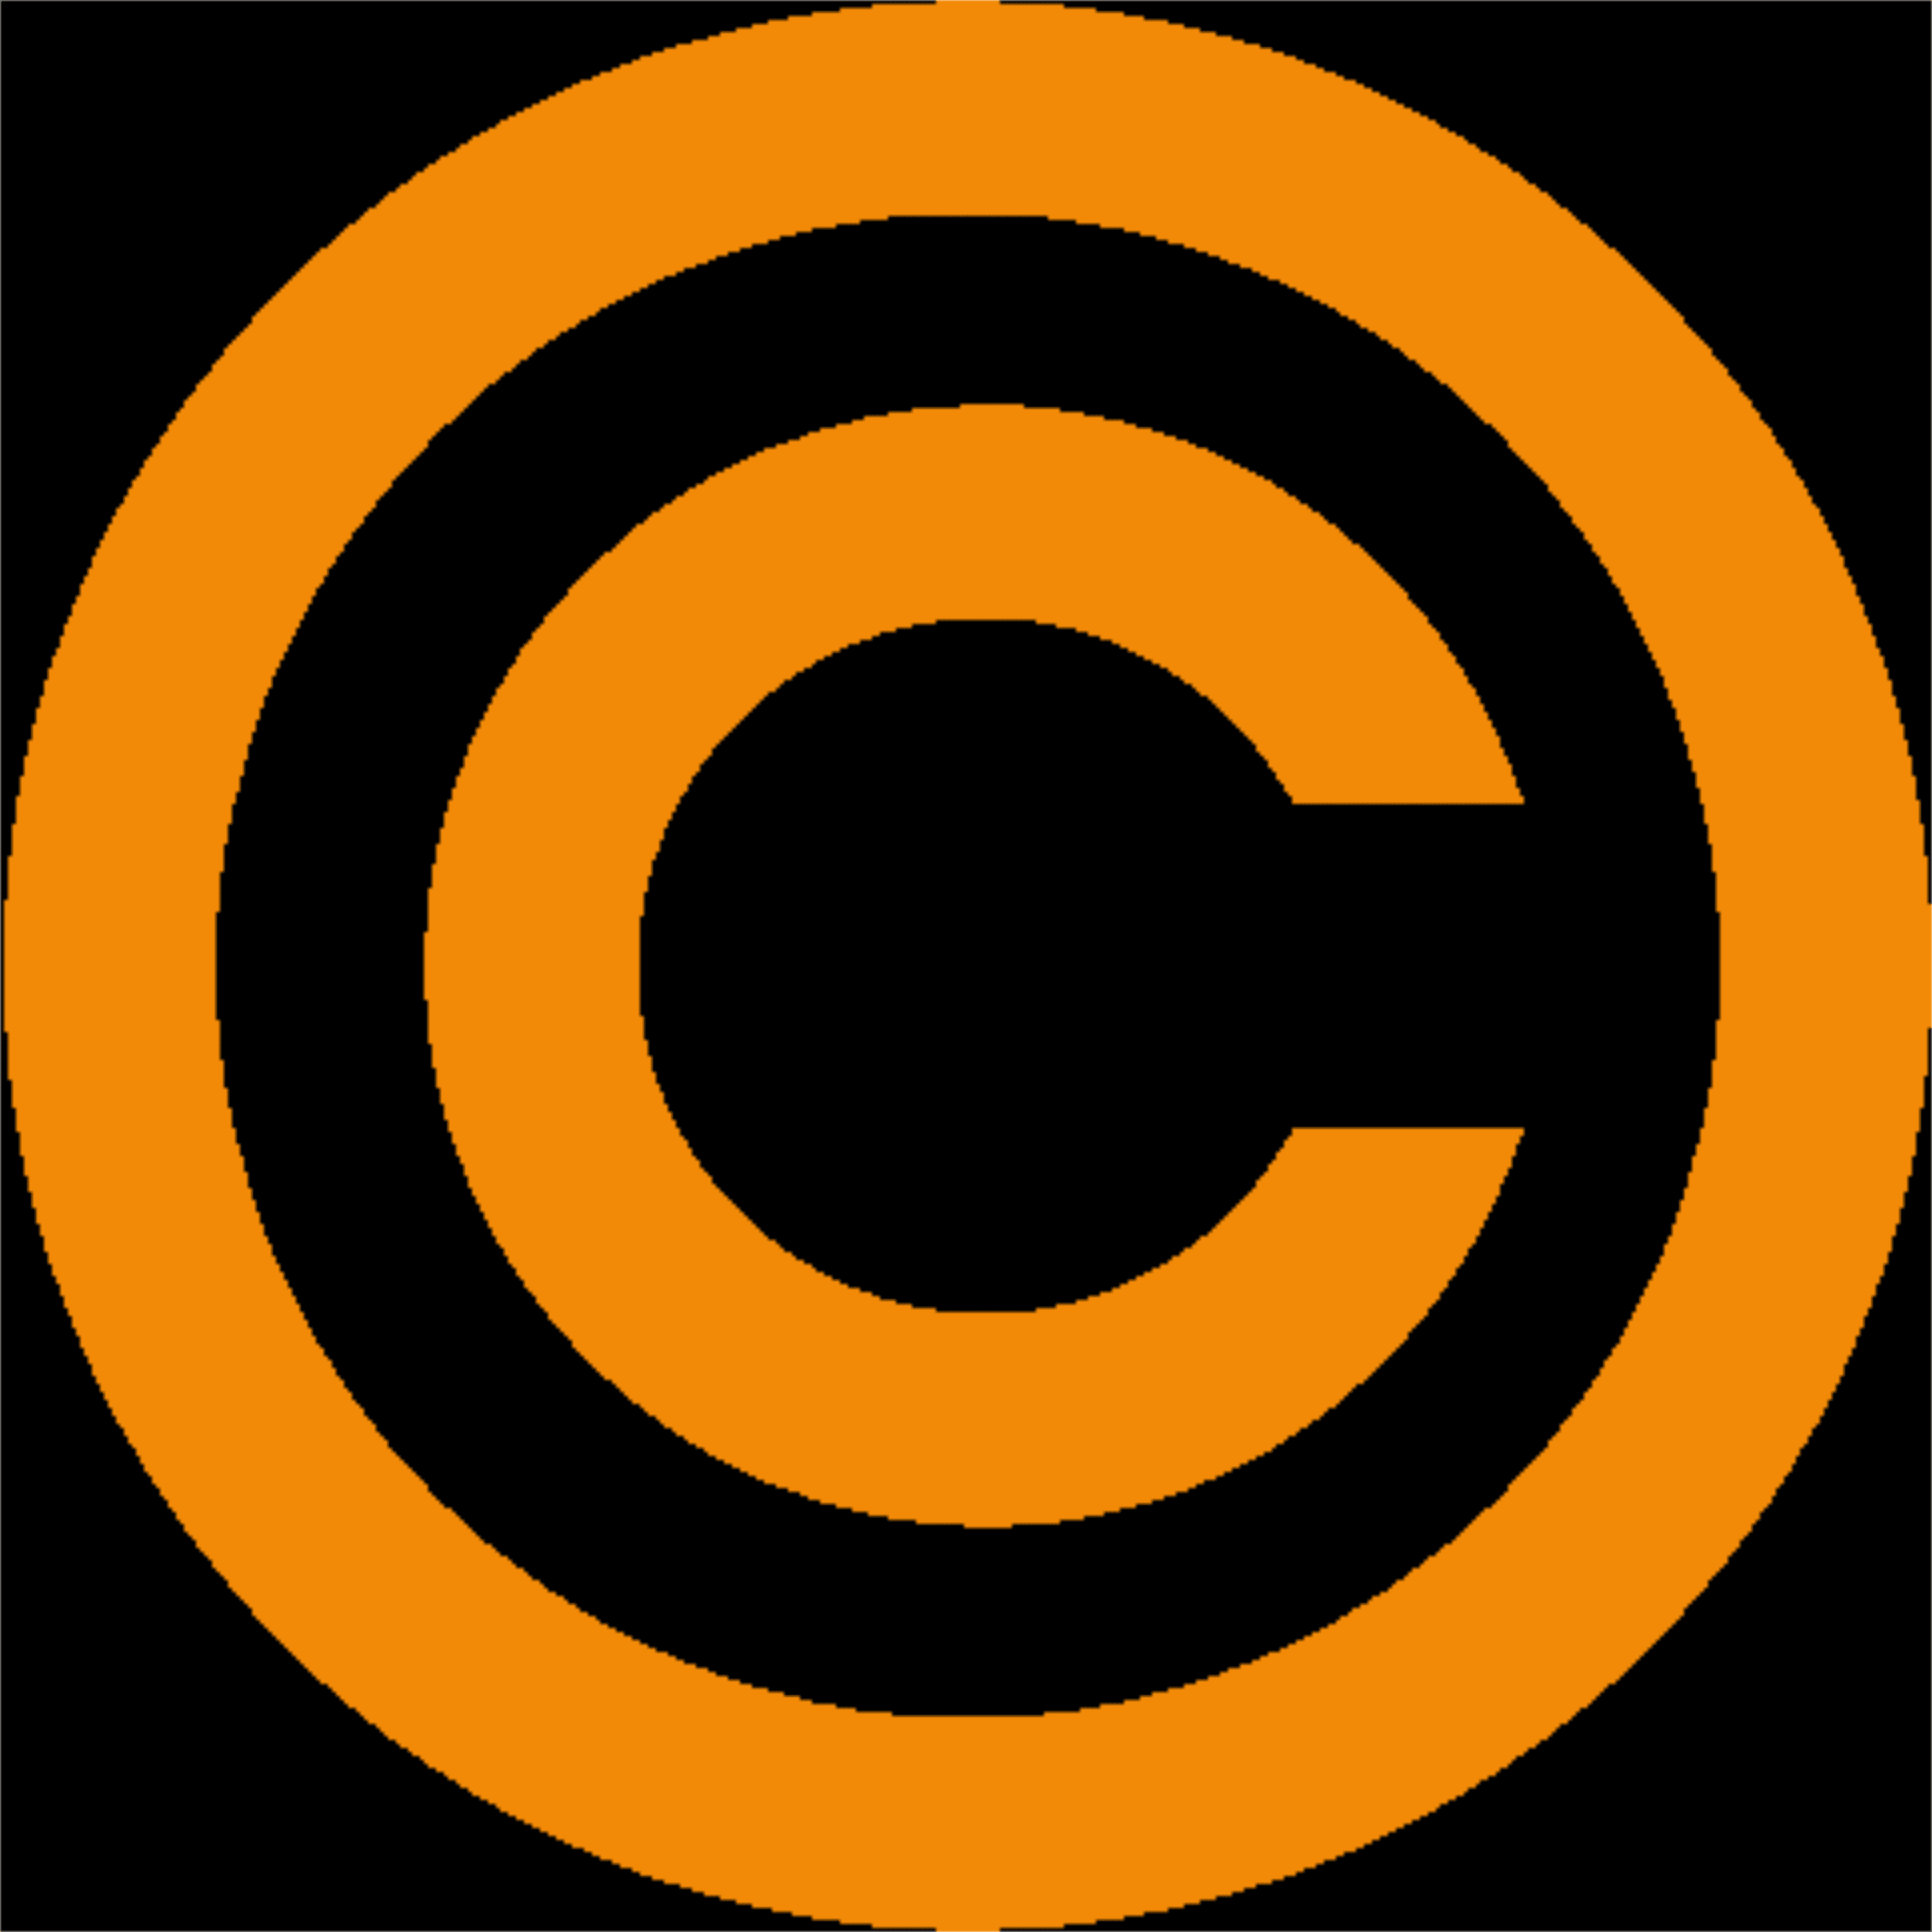 copyright logo